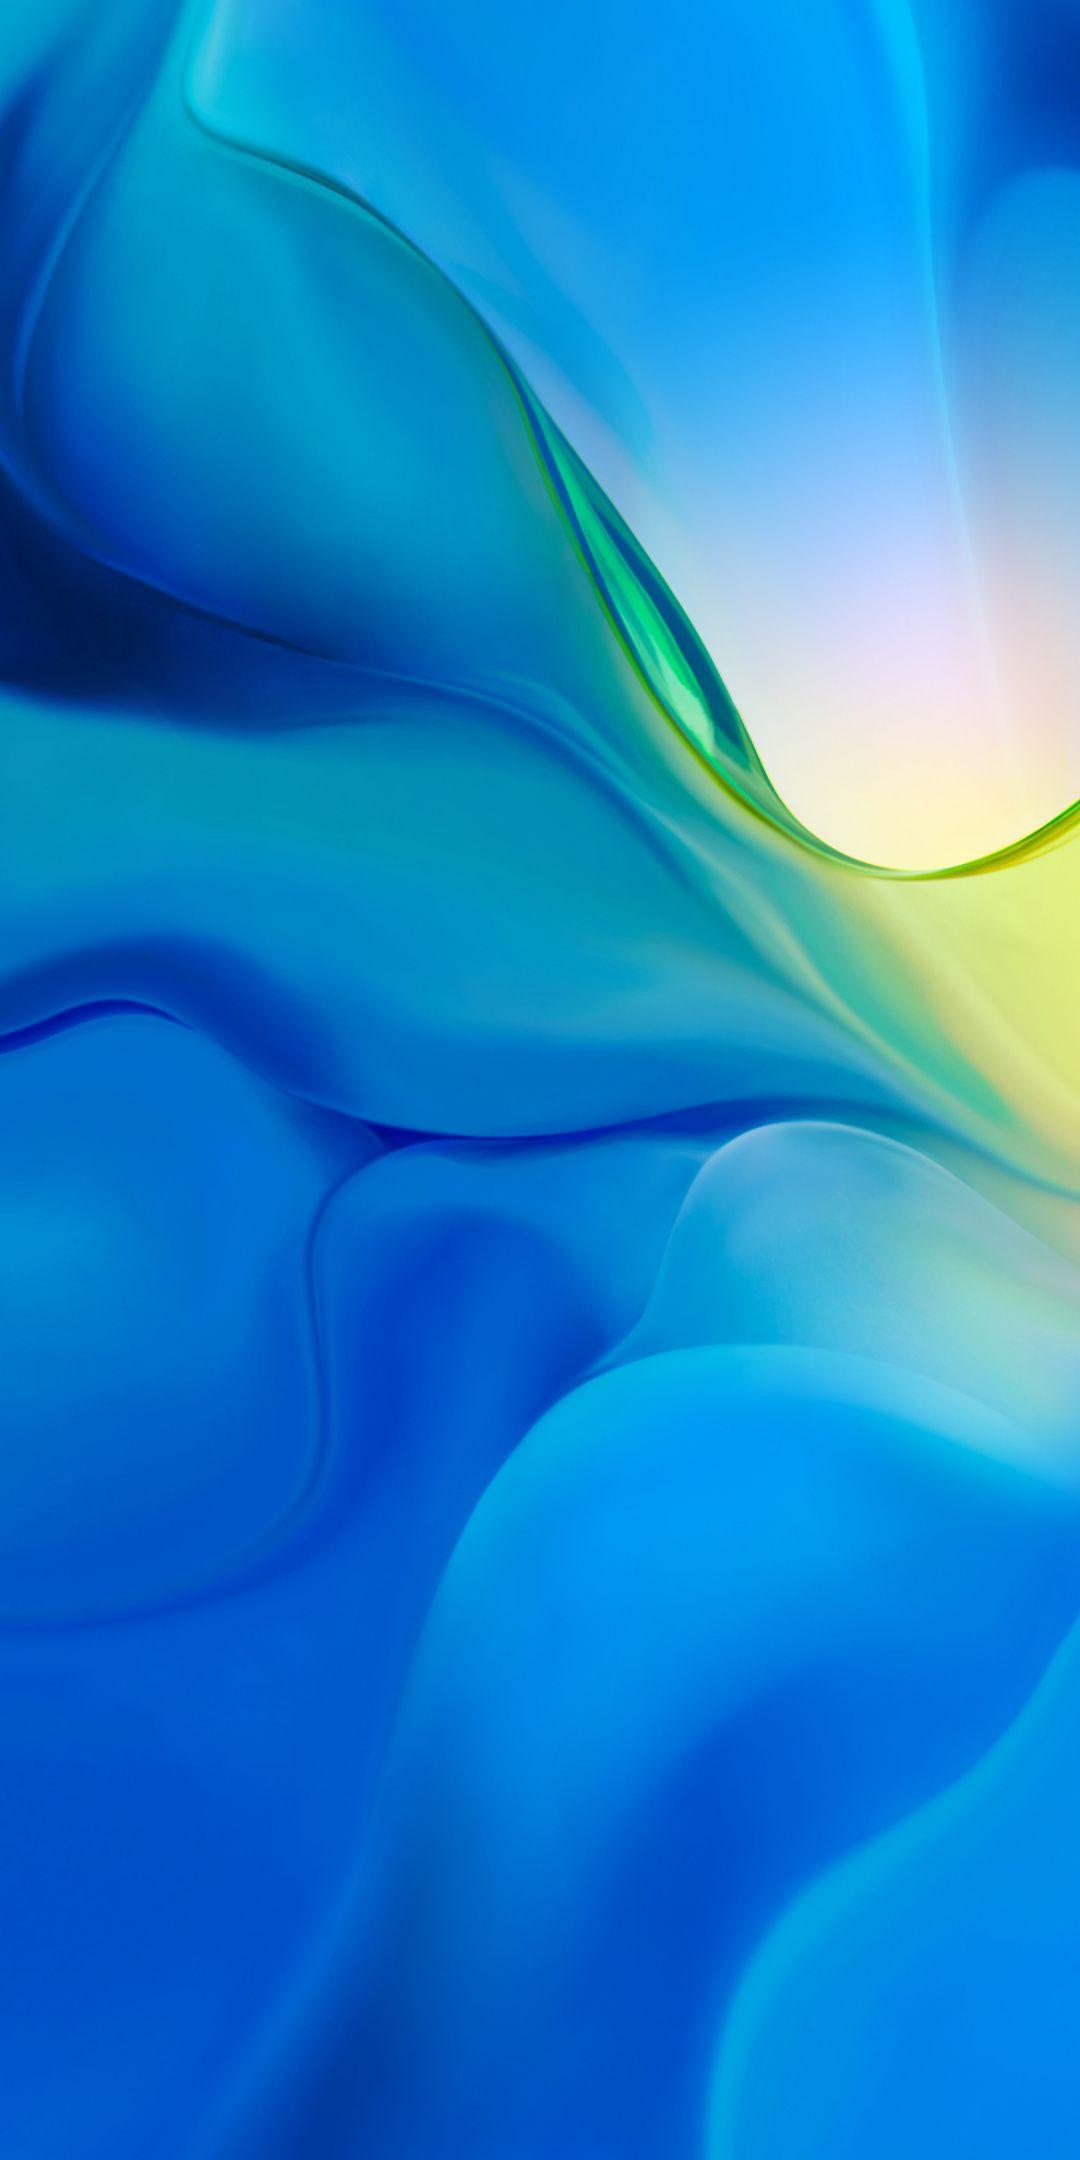 Wavy, Waves, Gradient, Blue Green, Huawei P Stock, Abstract Wallpaper. Huawei Wallpaper, Phone Wallpaper Image, Abstract Wallpaper